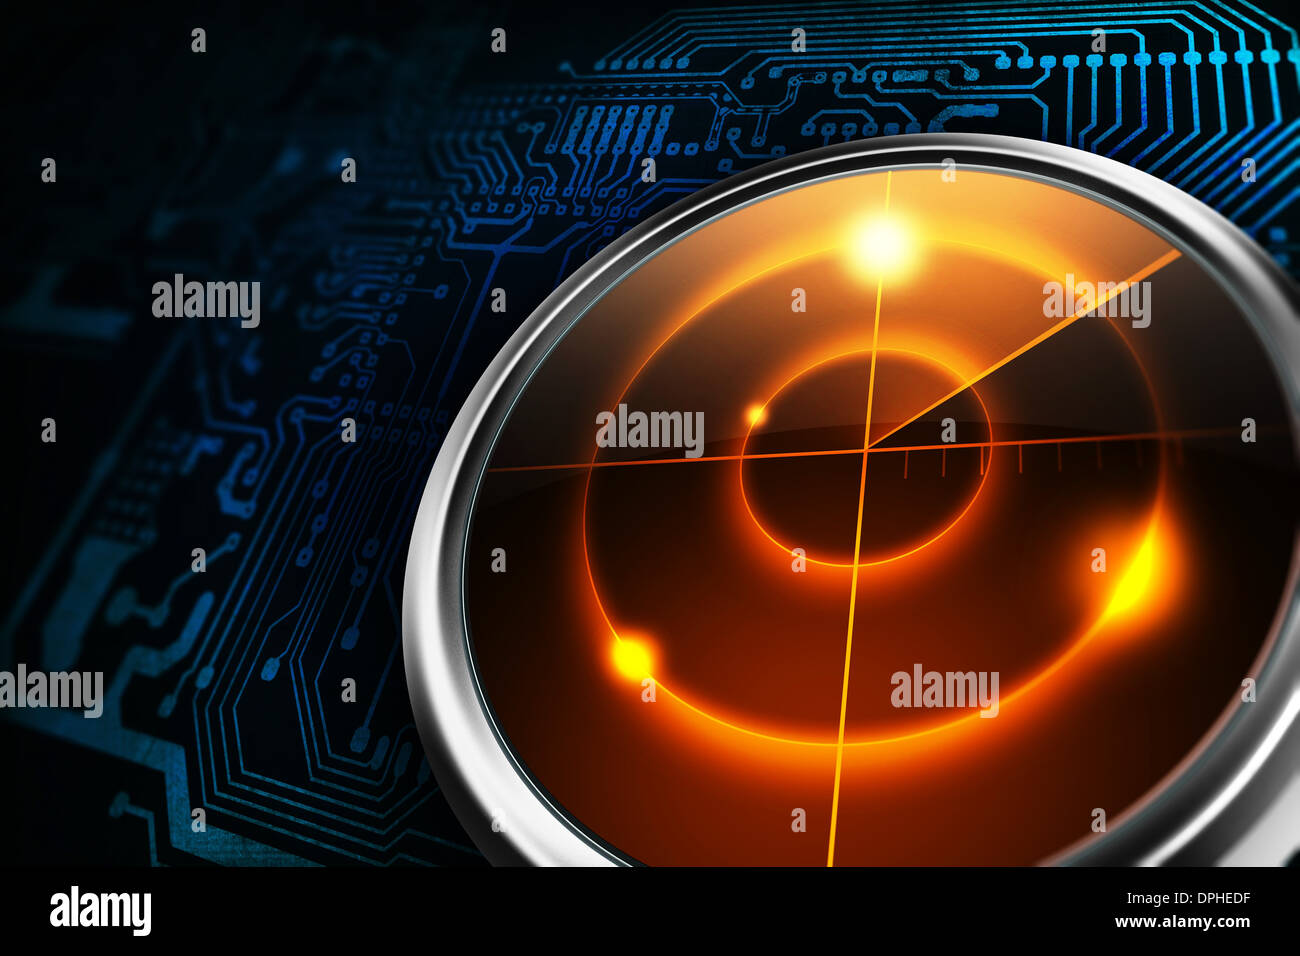 Radar Detection Illustration. Radar Scanning. Military Technology Abstract  Concept Stock Photo - Alamy